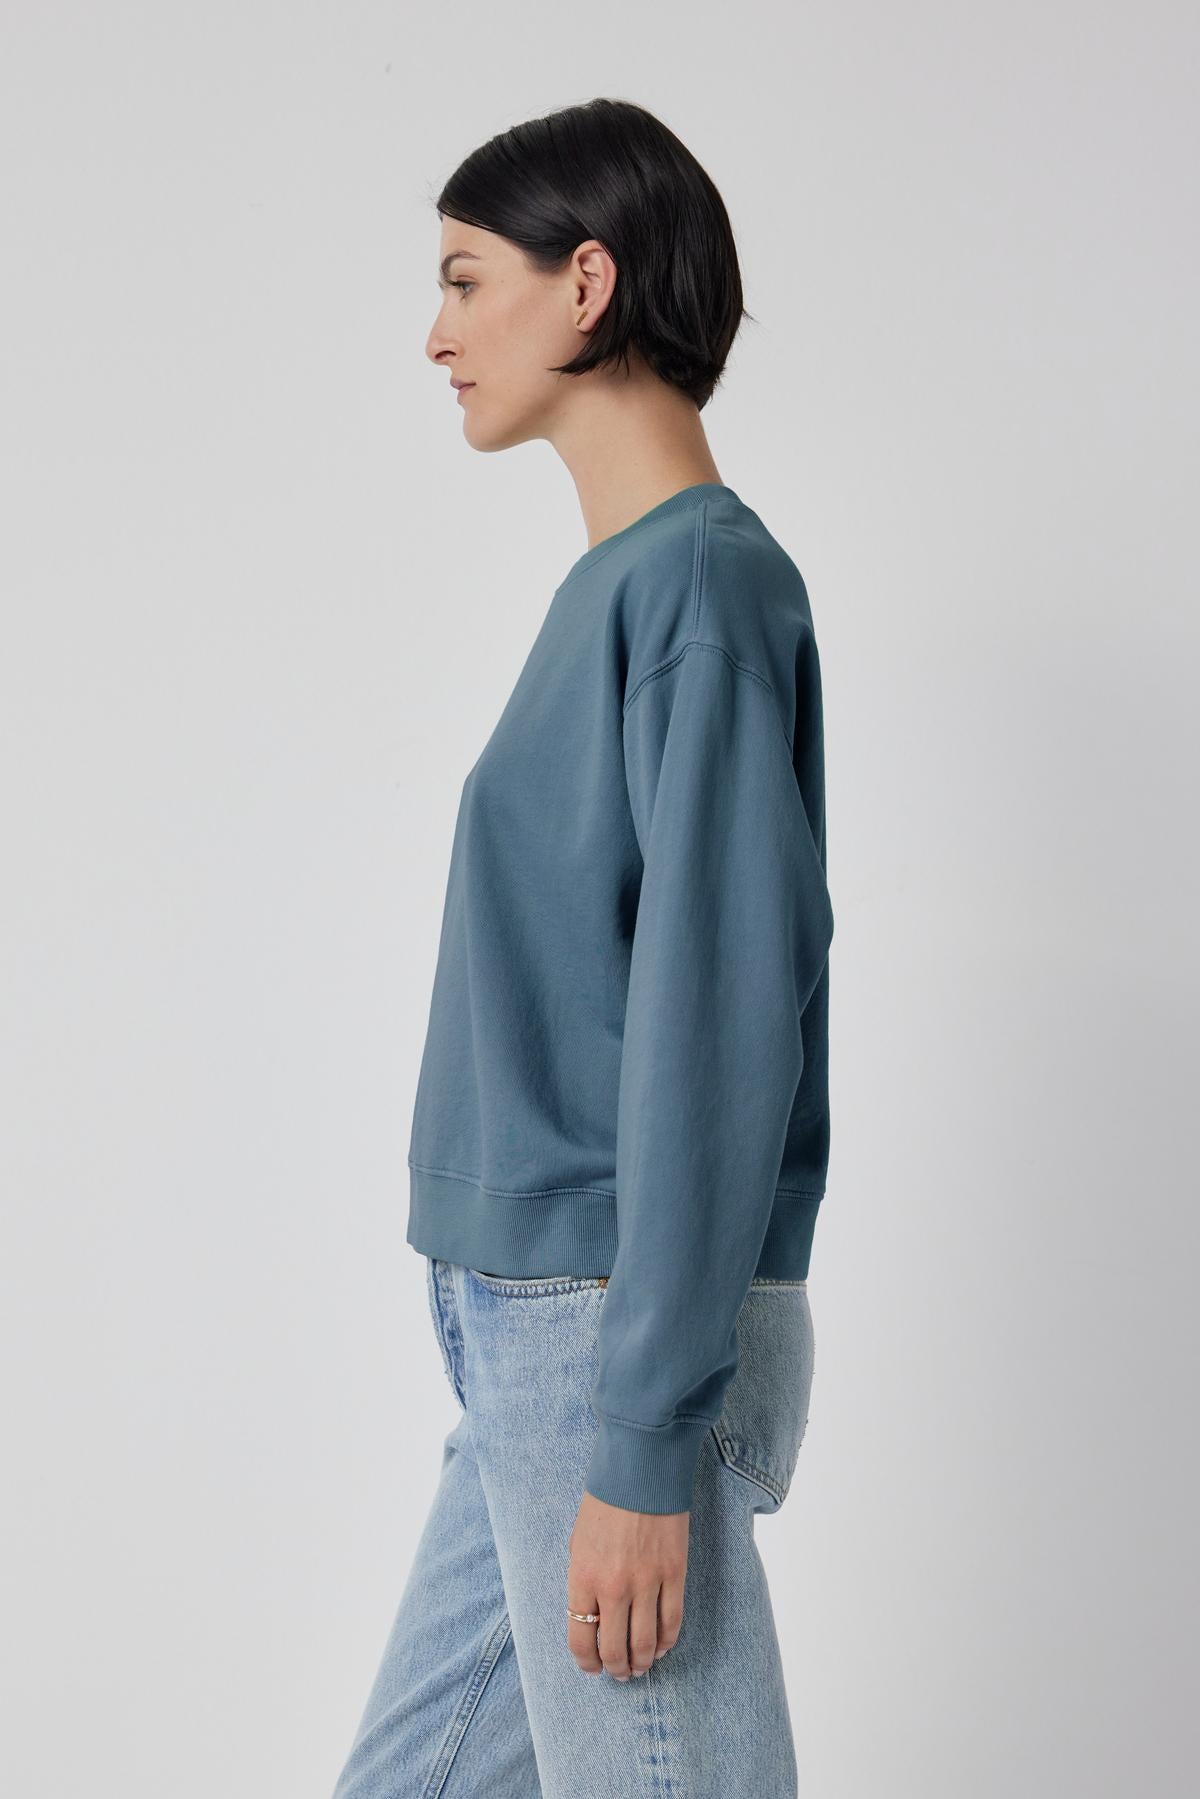 The model is wearing a dropped shoulder blue YNEZ SWEATSHIRT made of organic fleece by Velvet by Jenny Graham.-35721183723713